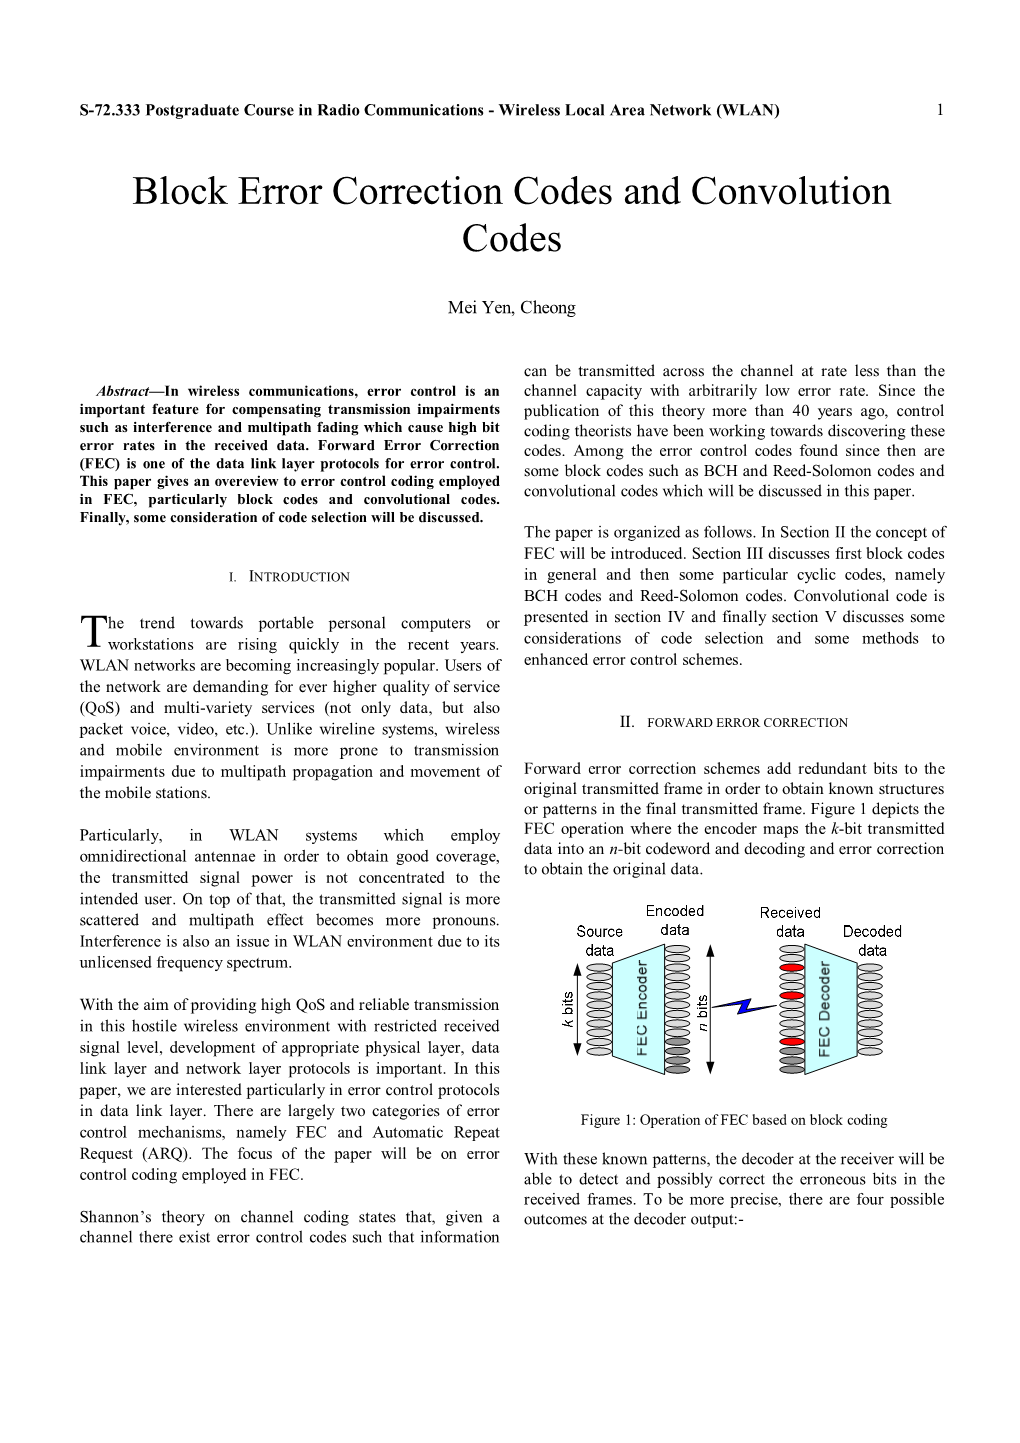 Block Error Correction Codes and Convolution Codes